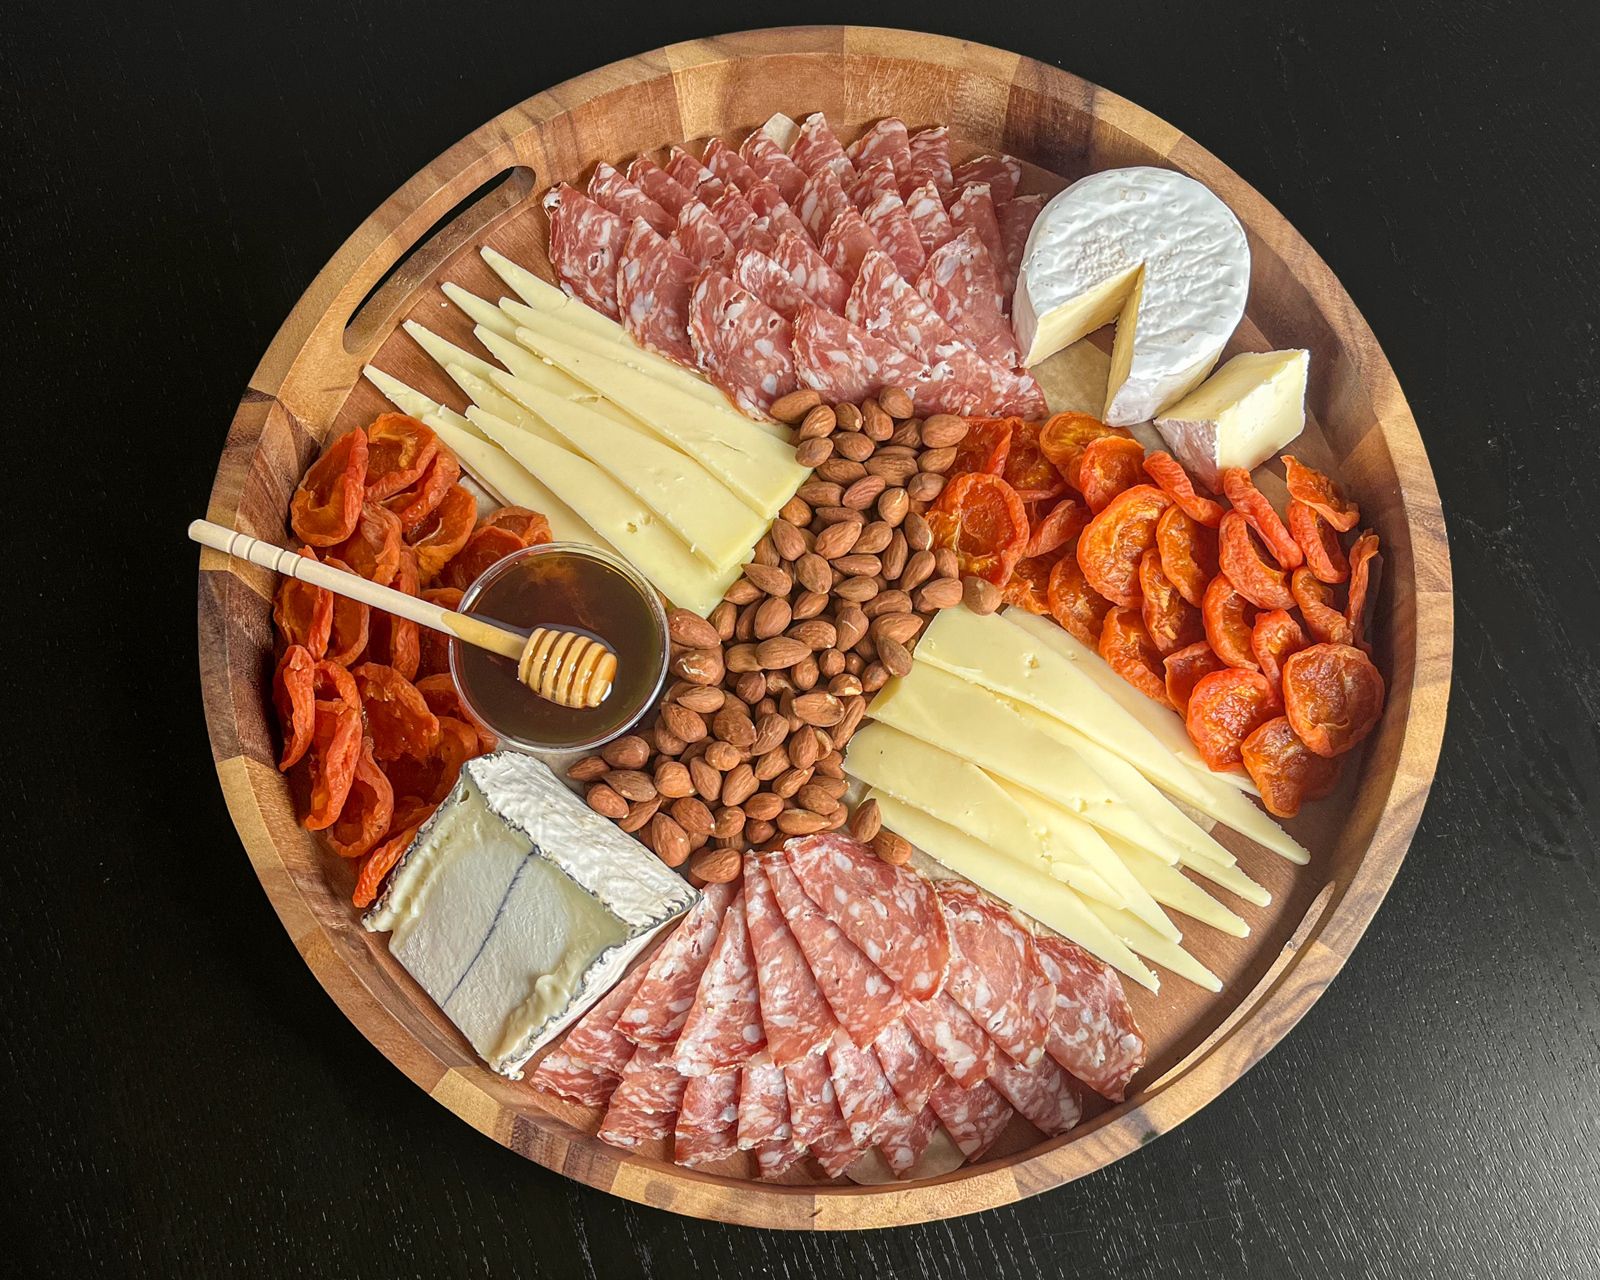 California Cheese & Salami on Wooden Platter